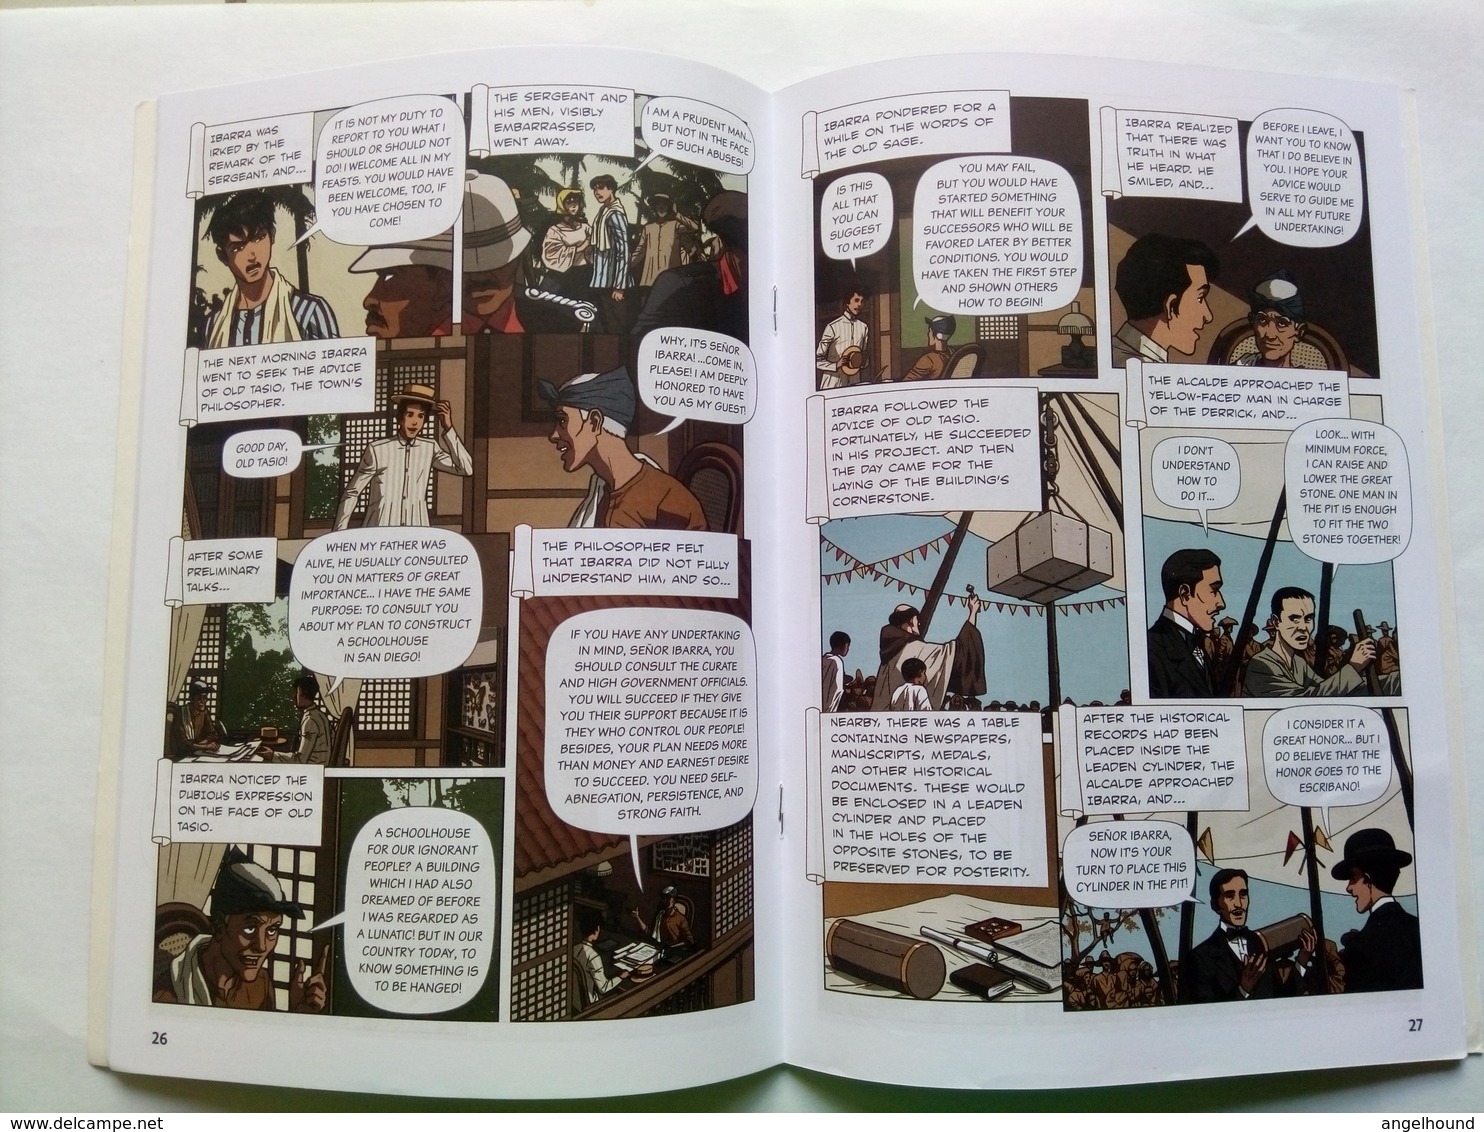 Jose Rizal's Noli Me Tangere - Vertaalde Stripverhalen